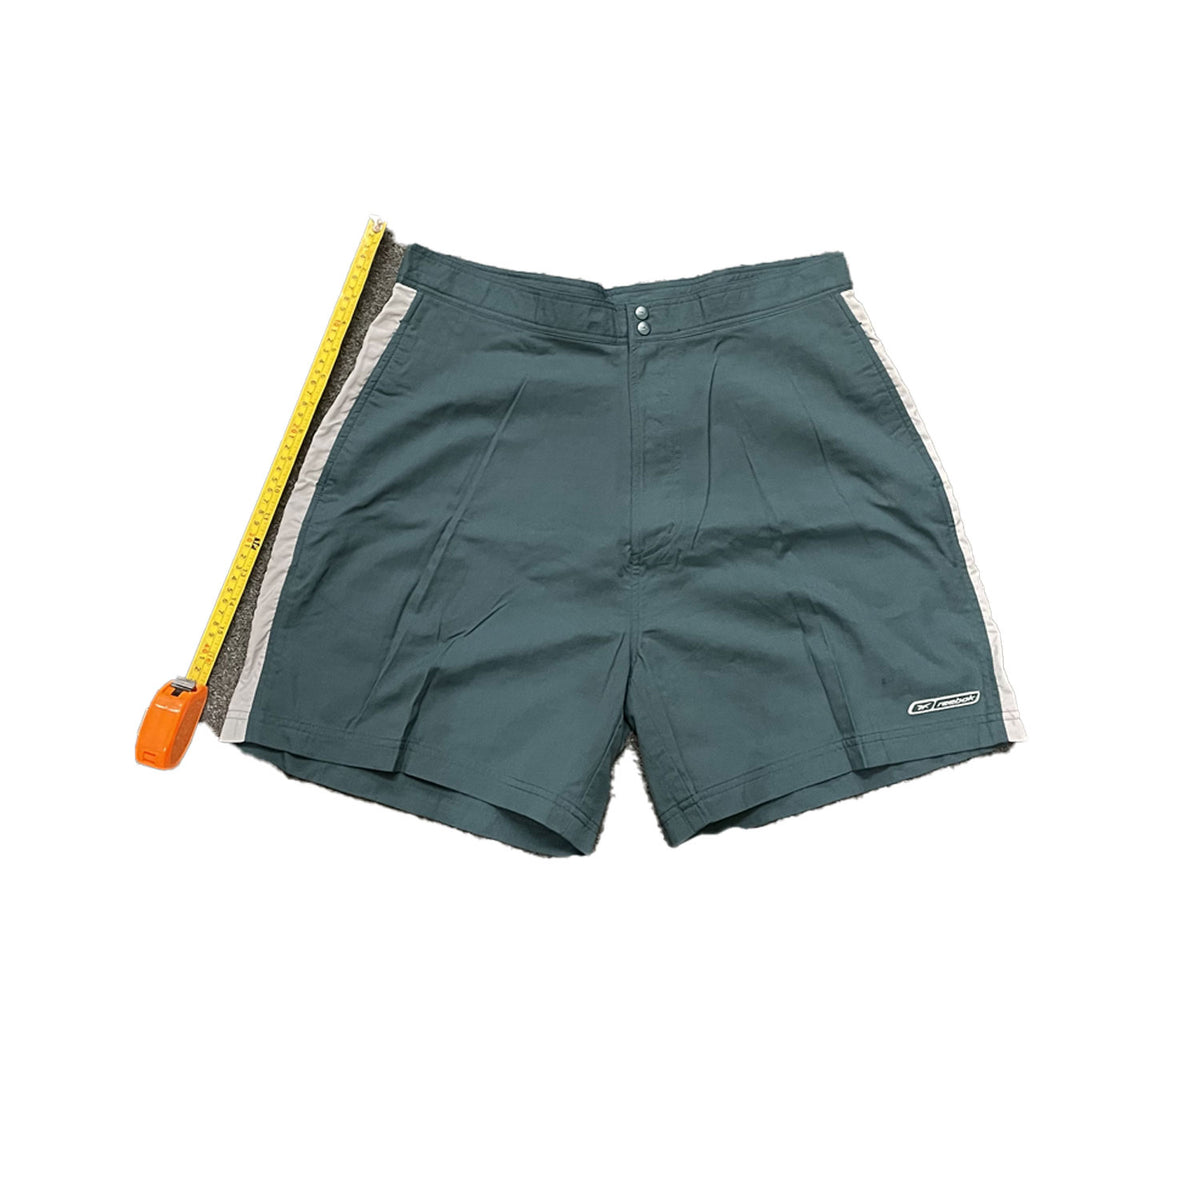 Reebok Original Mens Clearance Contrast Athletic Shorts 17